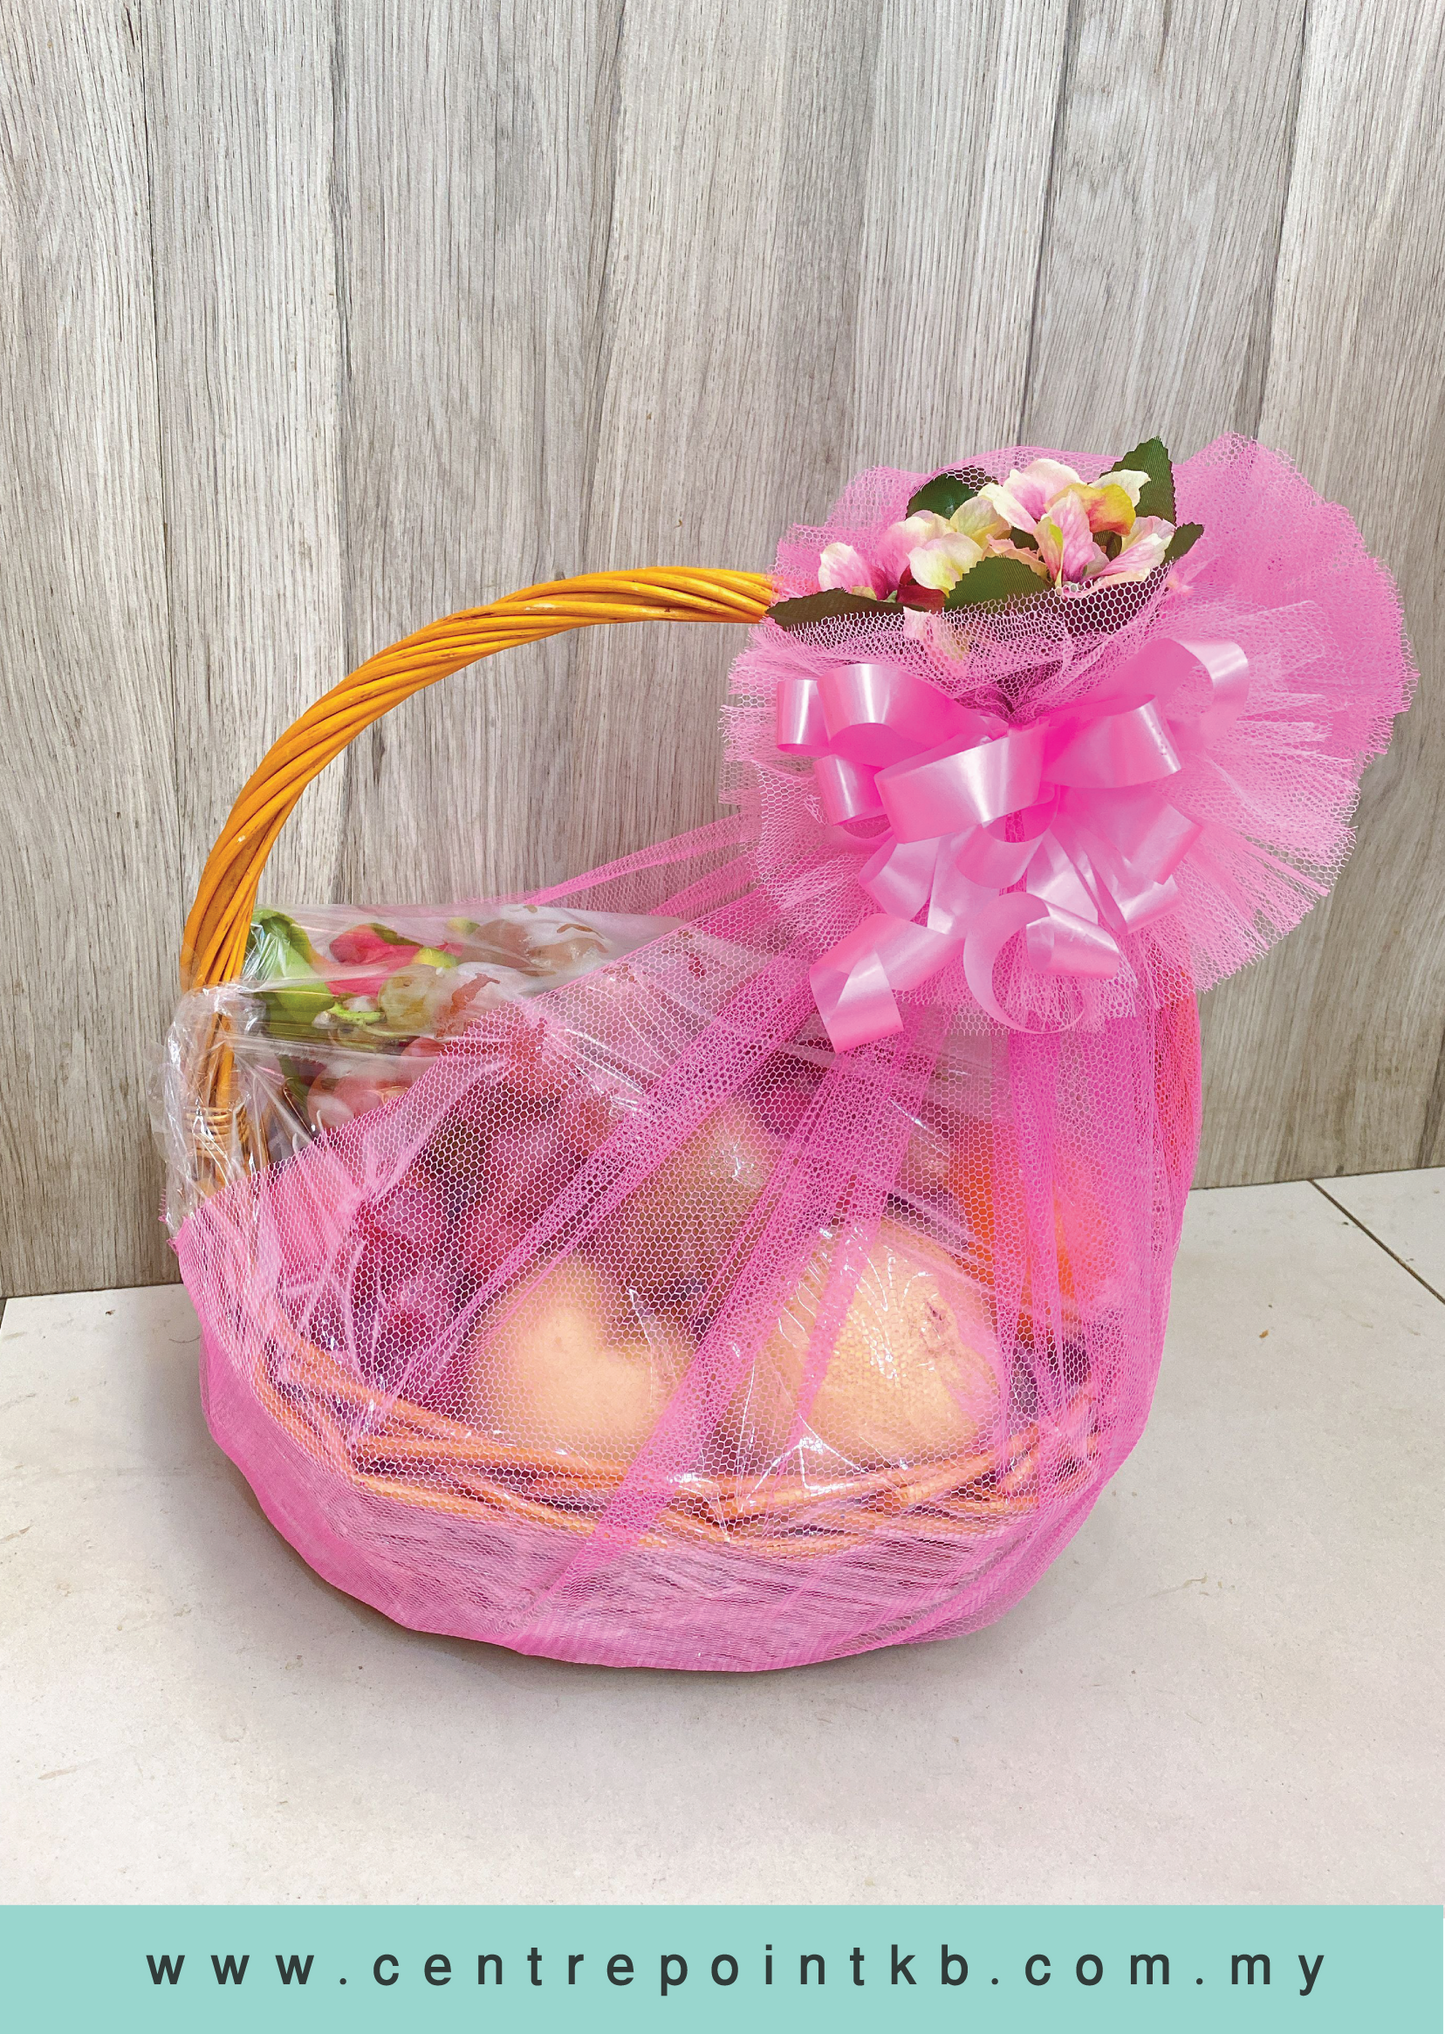 Fresh-Fruity Basket 02 (RM 100.00)